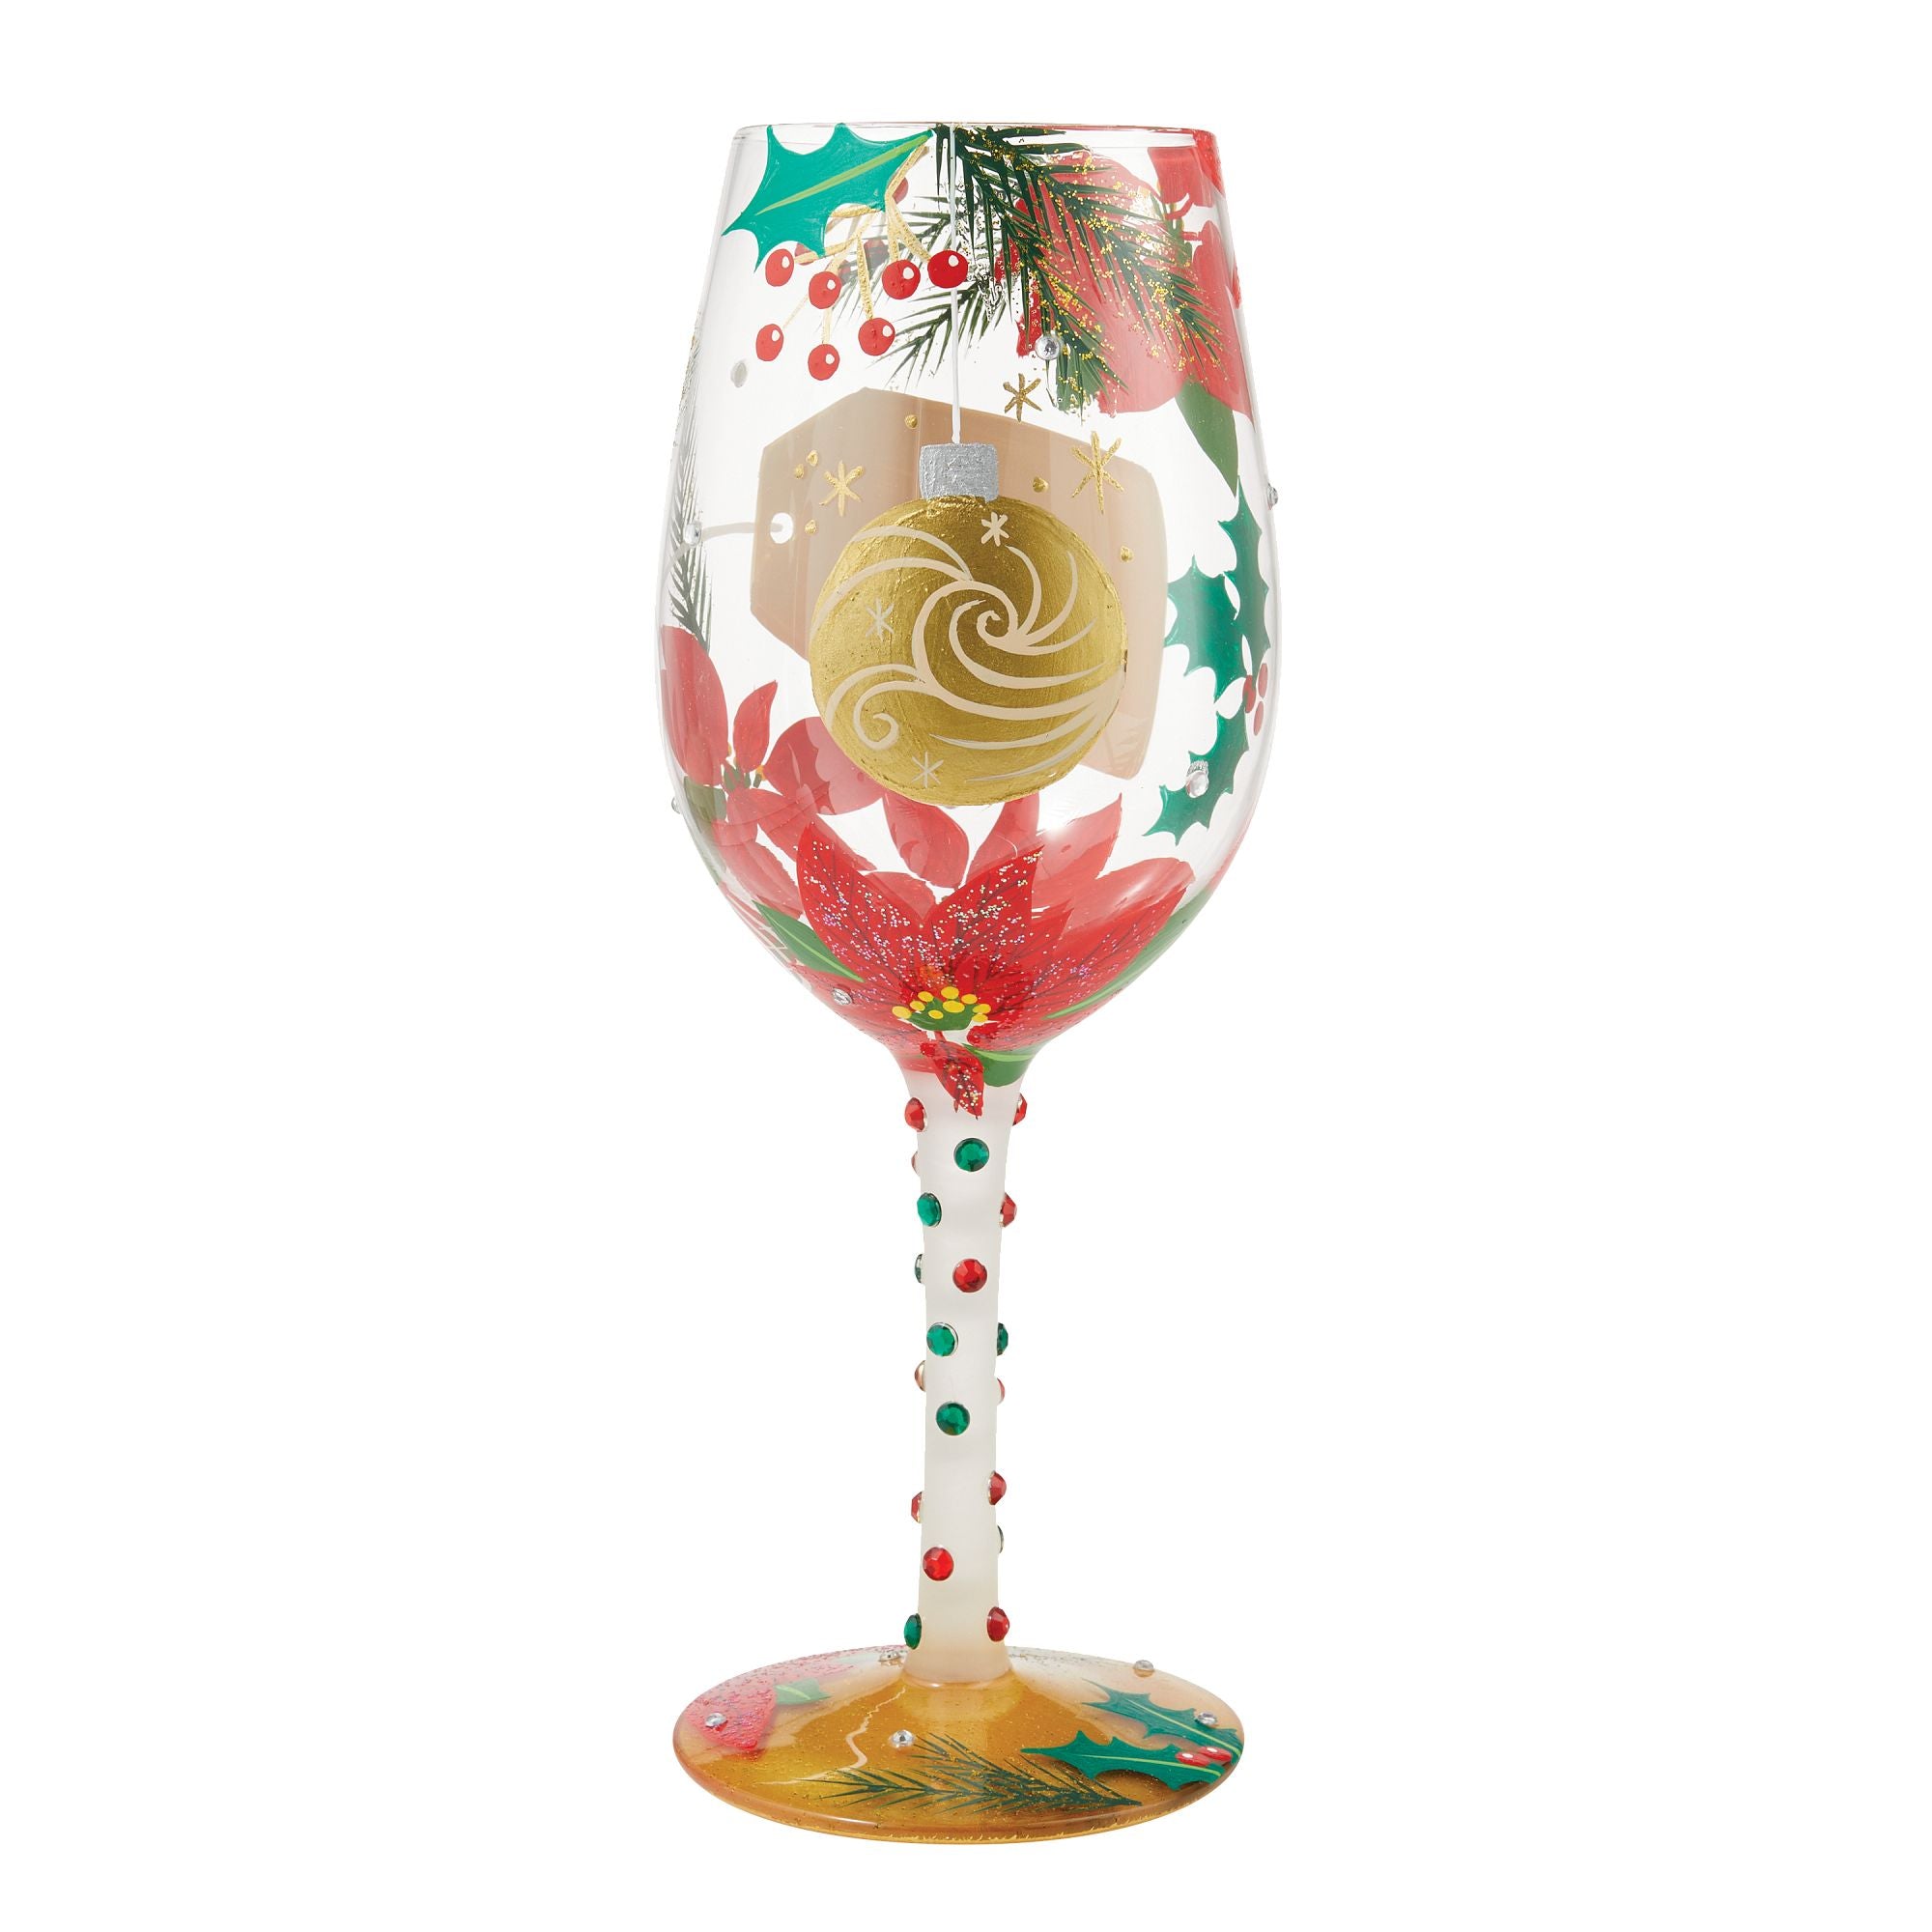 Pretty as a Poinsettia Wine Glass by Lolita